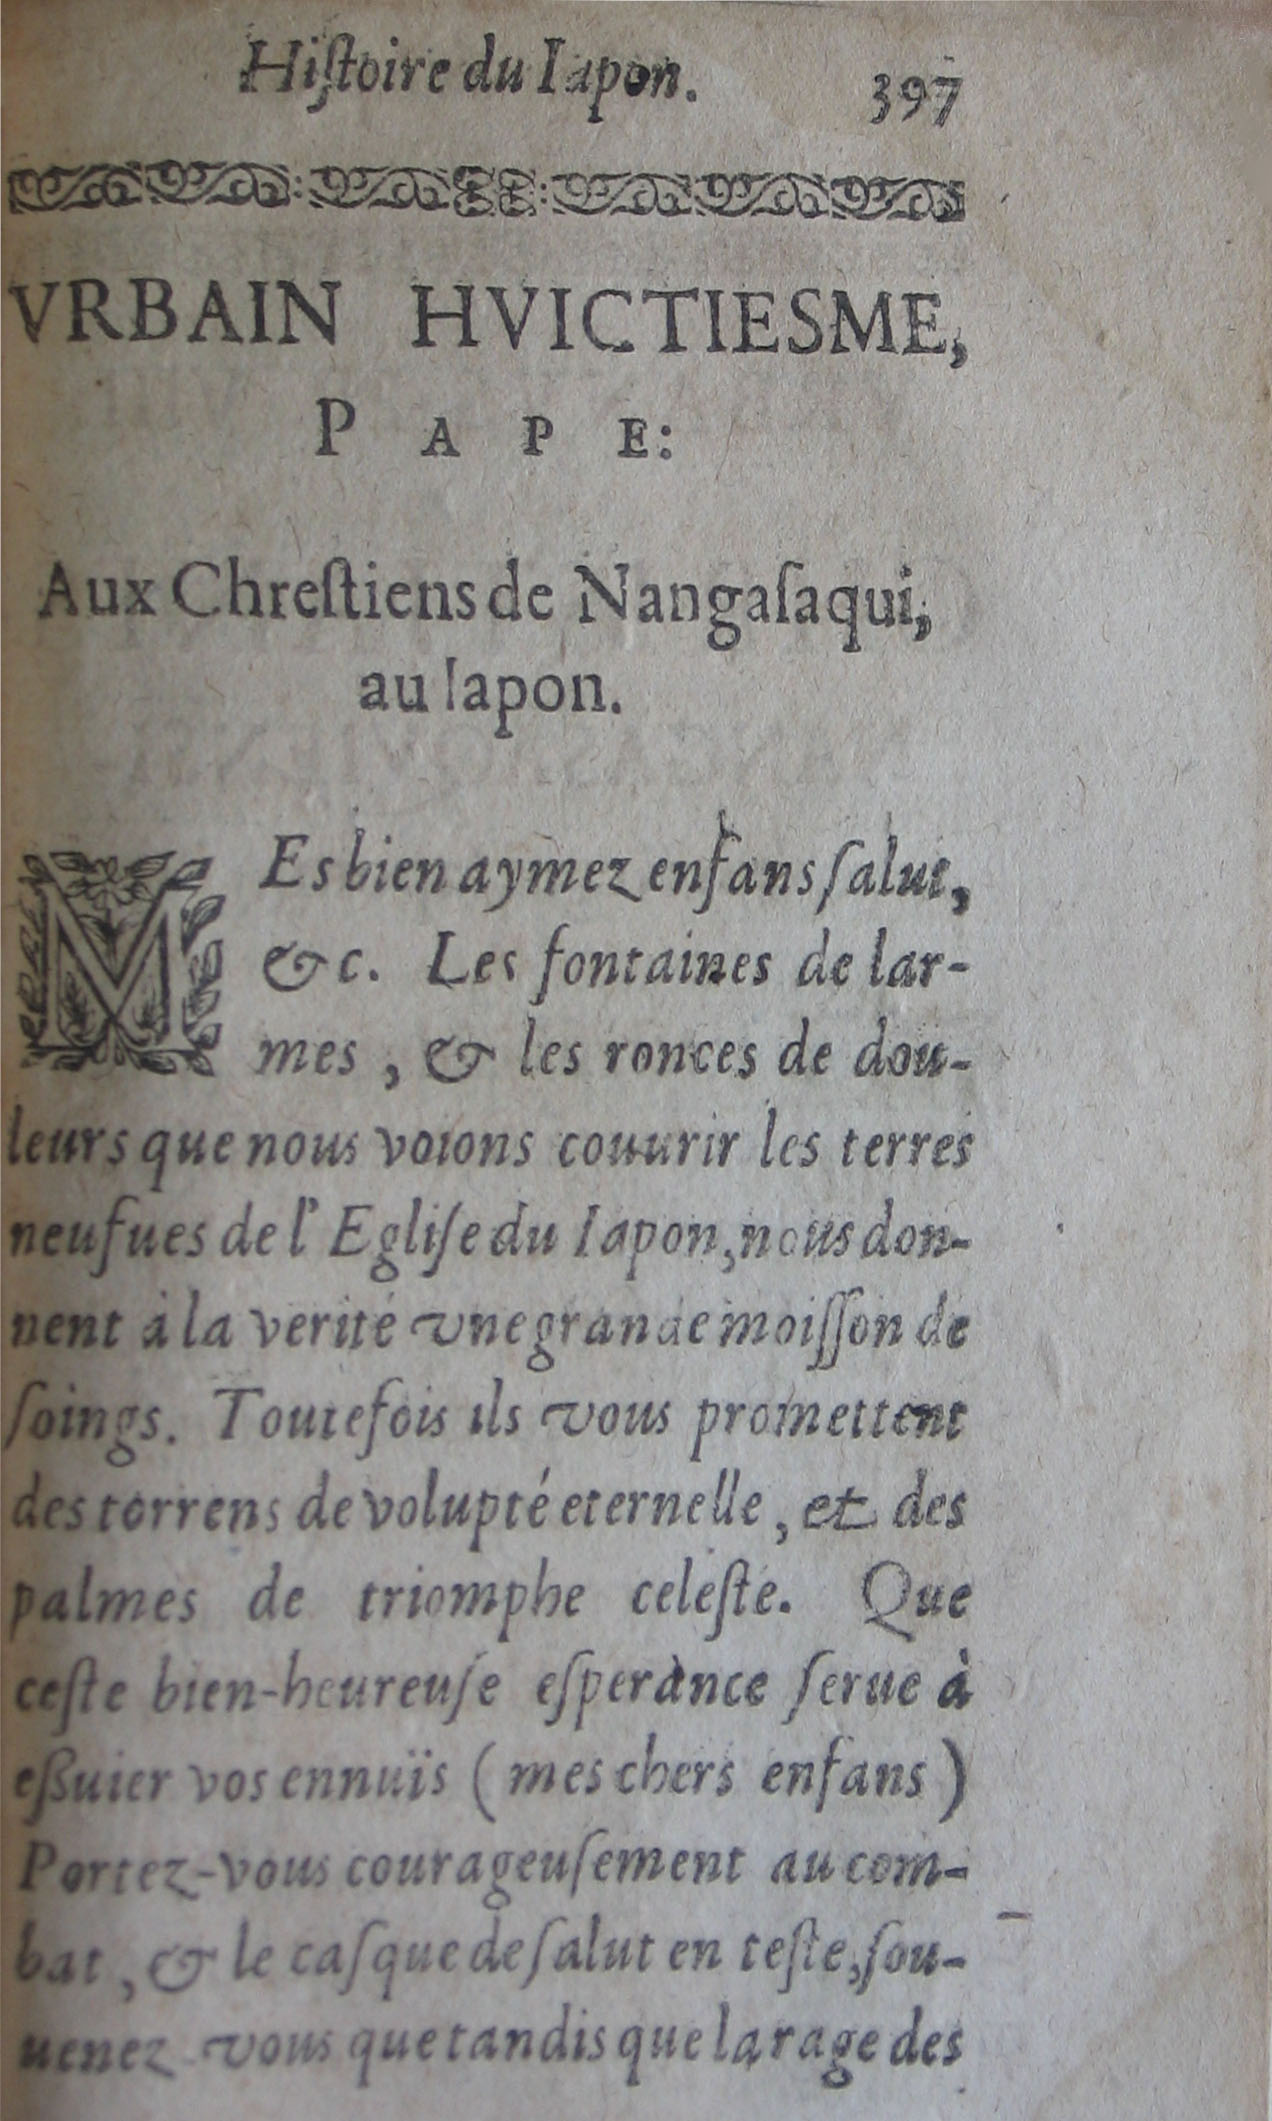 p. 379 (397).JPG